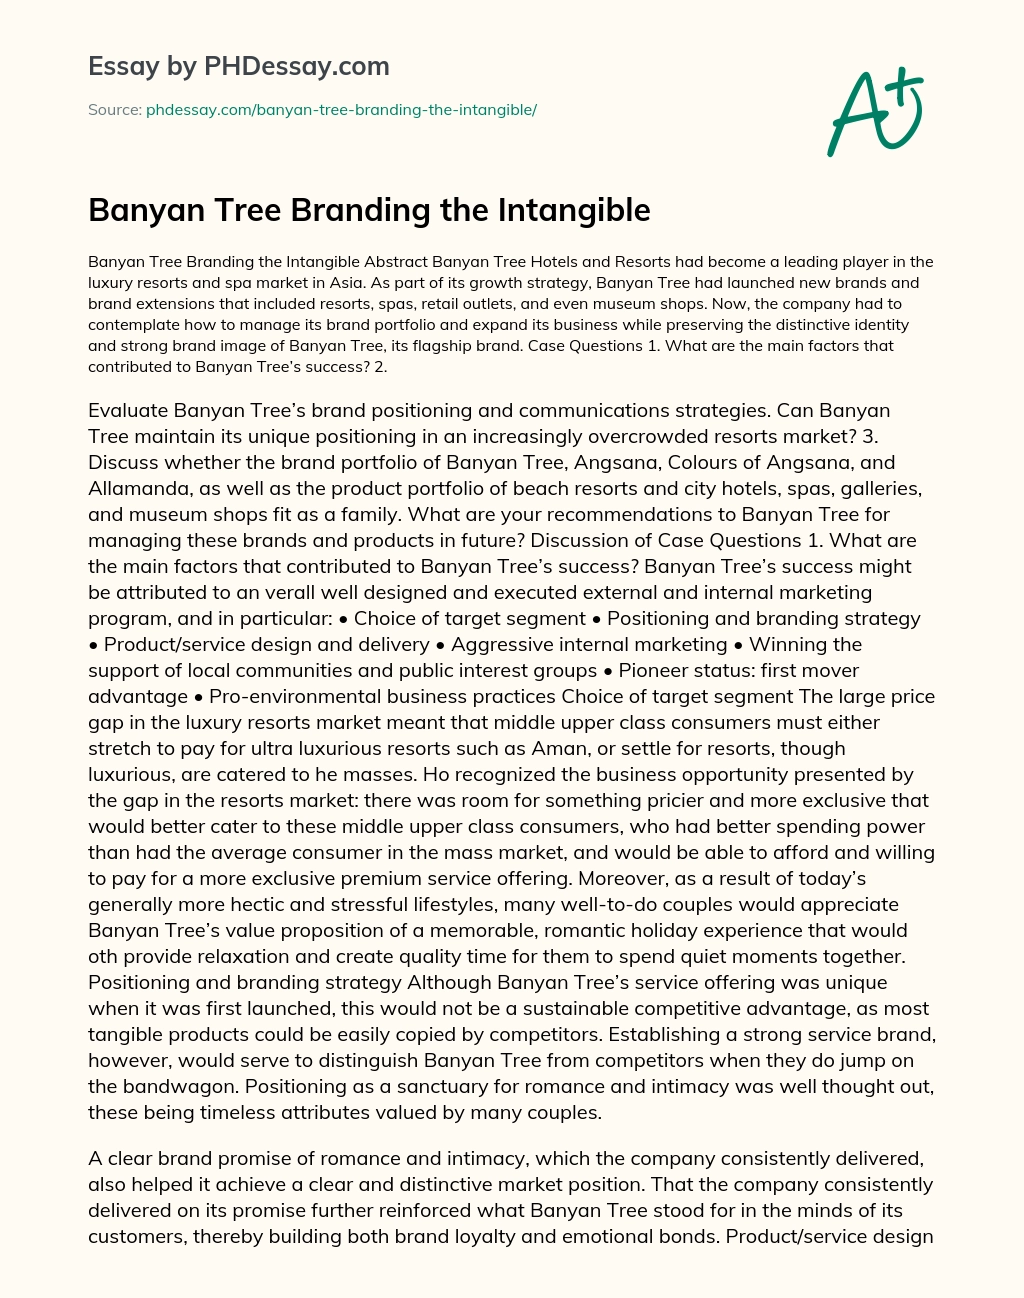 Banyan Tree Branding the Intangible essay